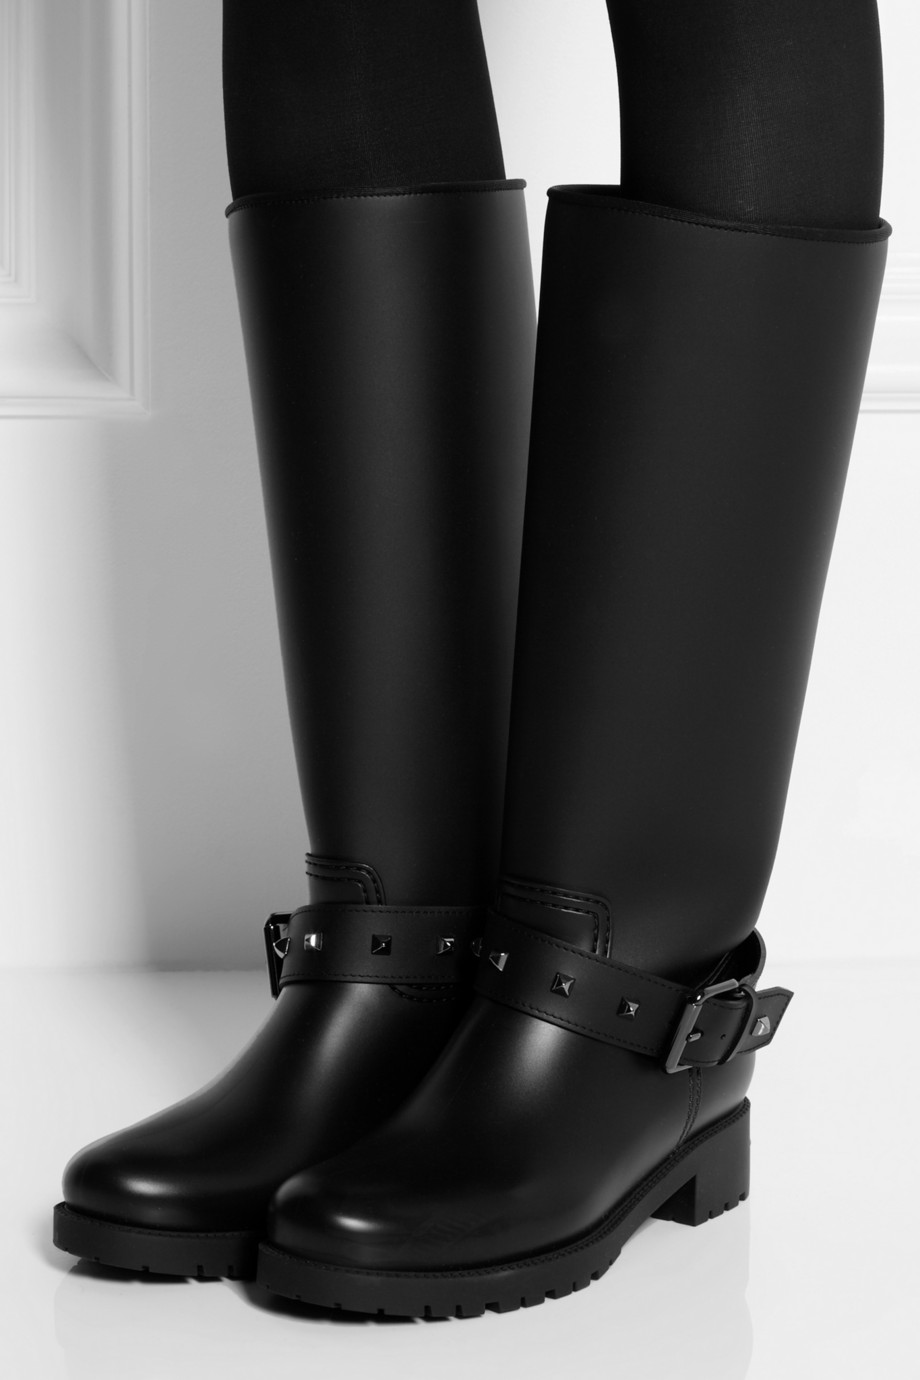 Lyst - Karl Lagerfeld Studded Rubber Wellington Boots in Black